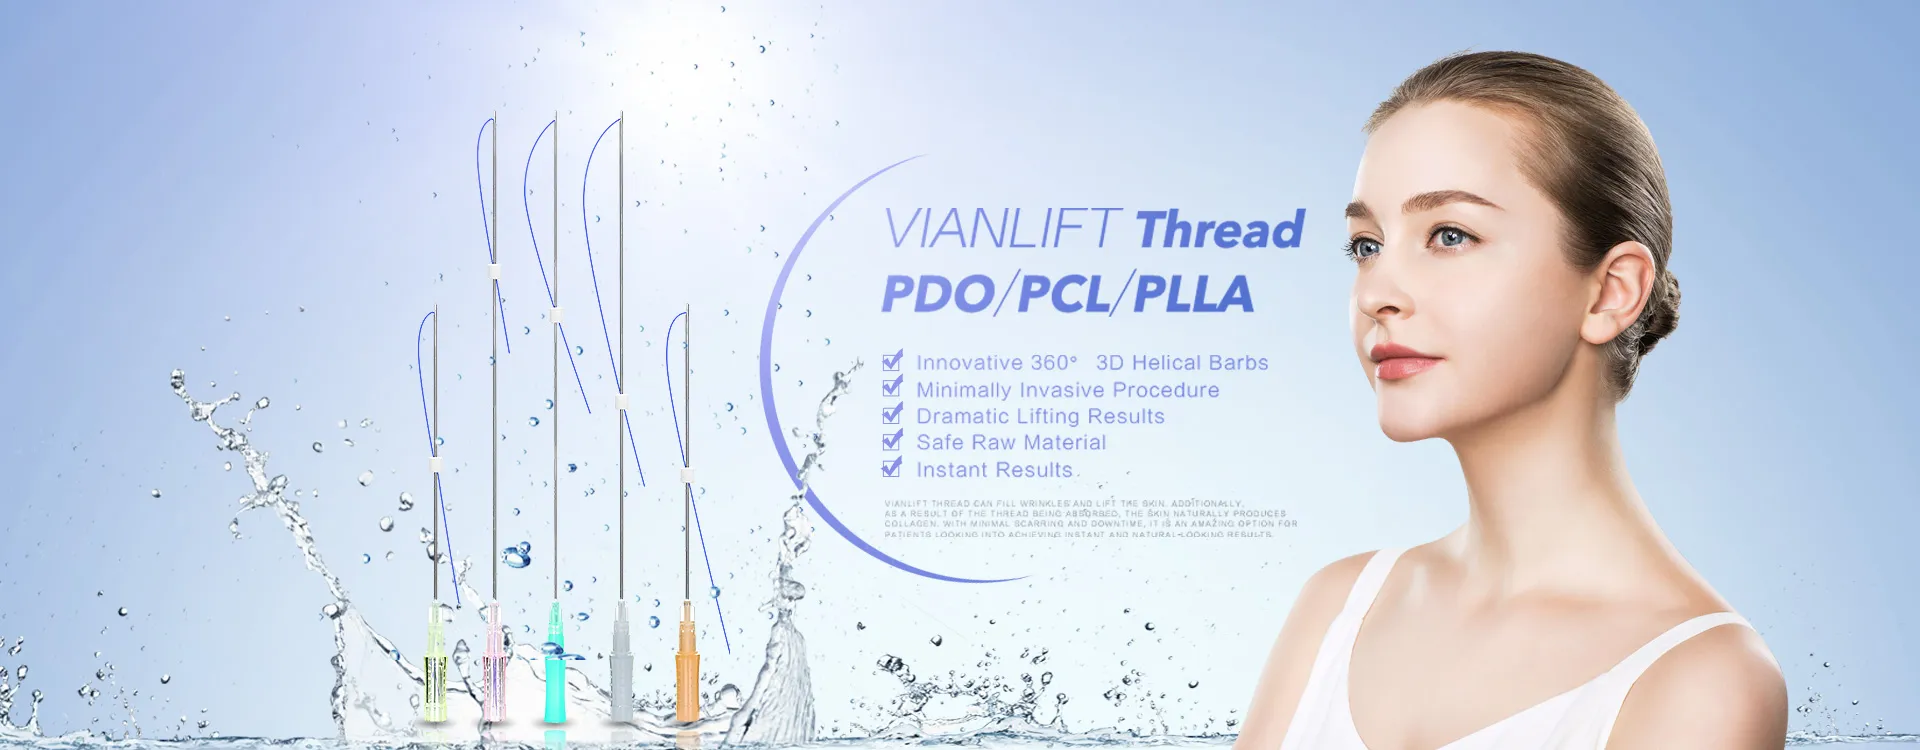 VIANLIFT-Thread PDO / PCL / PLLA